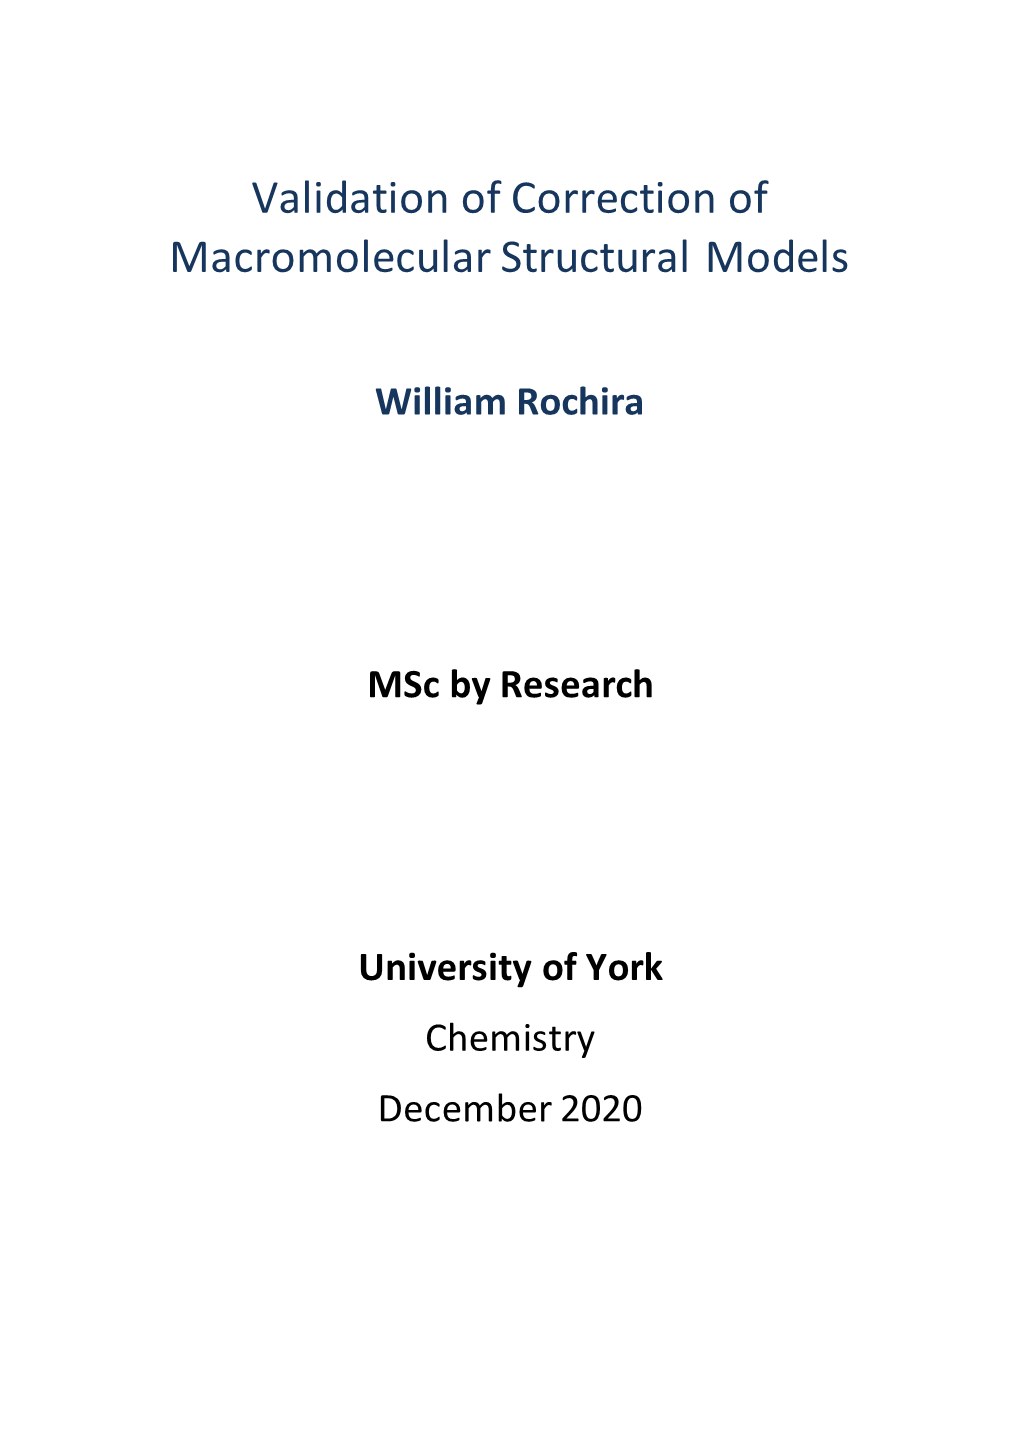 Validation of Correction of Macromolecular Structural Models